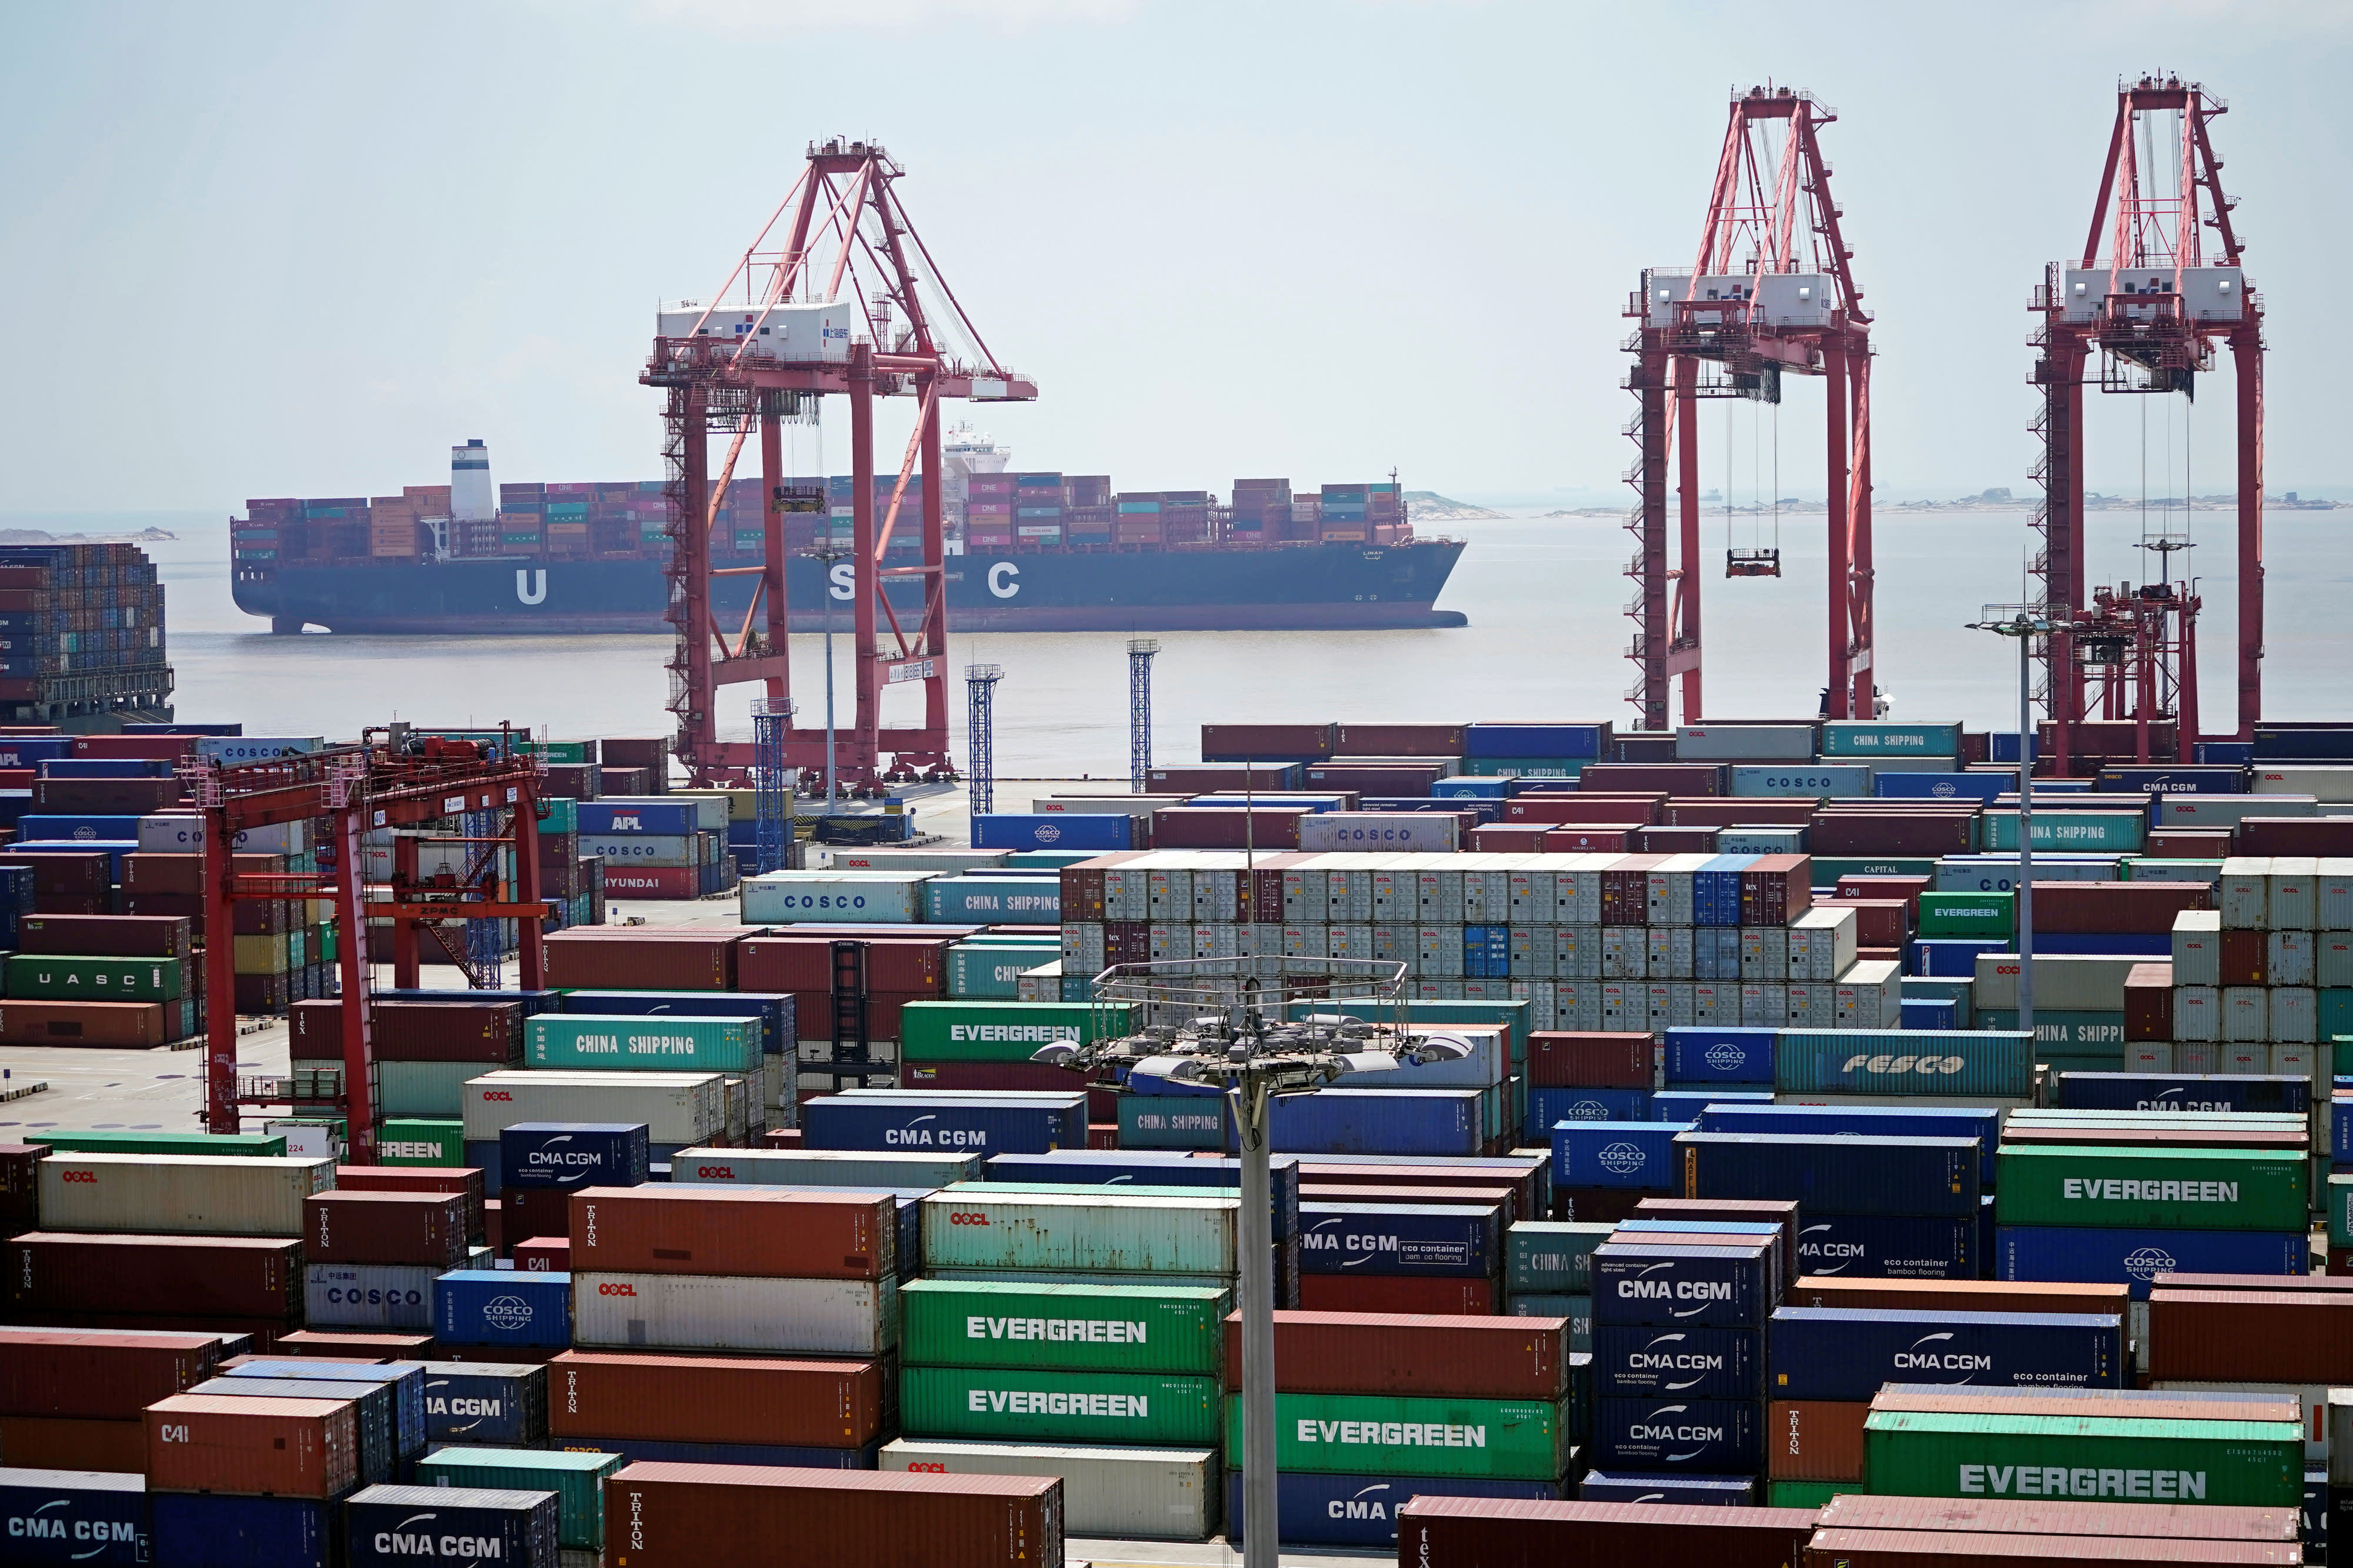 Tiongkok melaporkan pertumbuhan ekspor yang lebih tinggi dari perkiraan pada bulan Desember